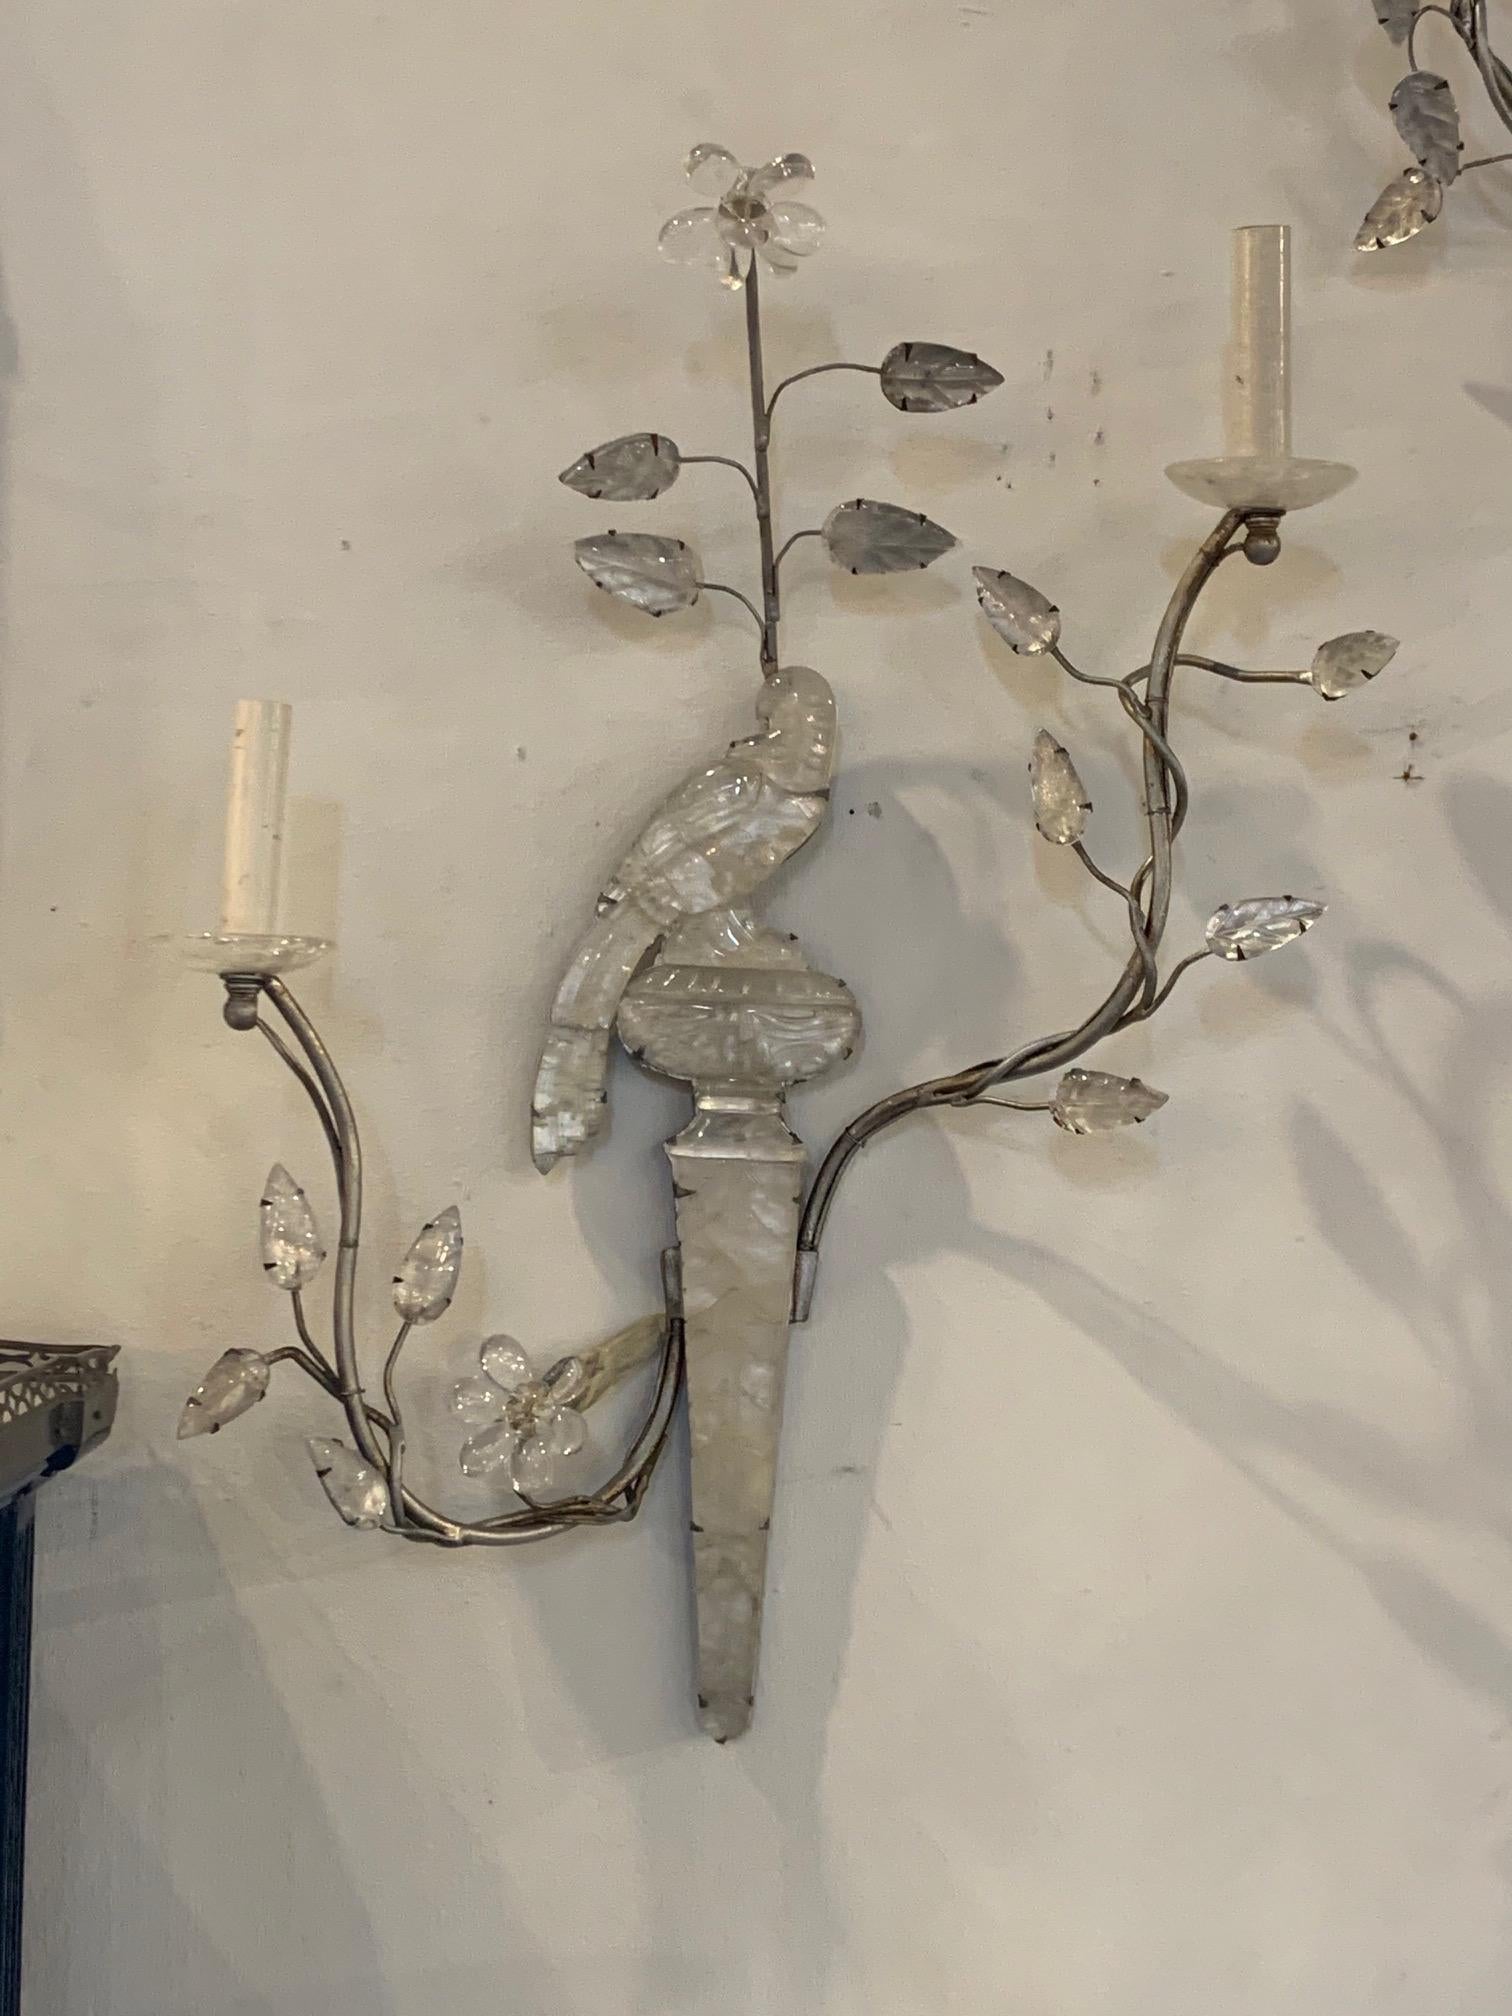 Amazing pair of vintage French Maison Bagues rock crystal and silver leaf parrot form sconces. Each has 2 lights. So unique! A beautiful decorative element.